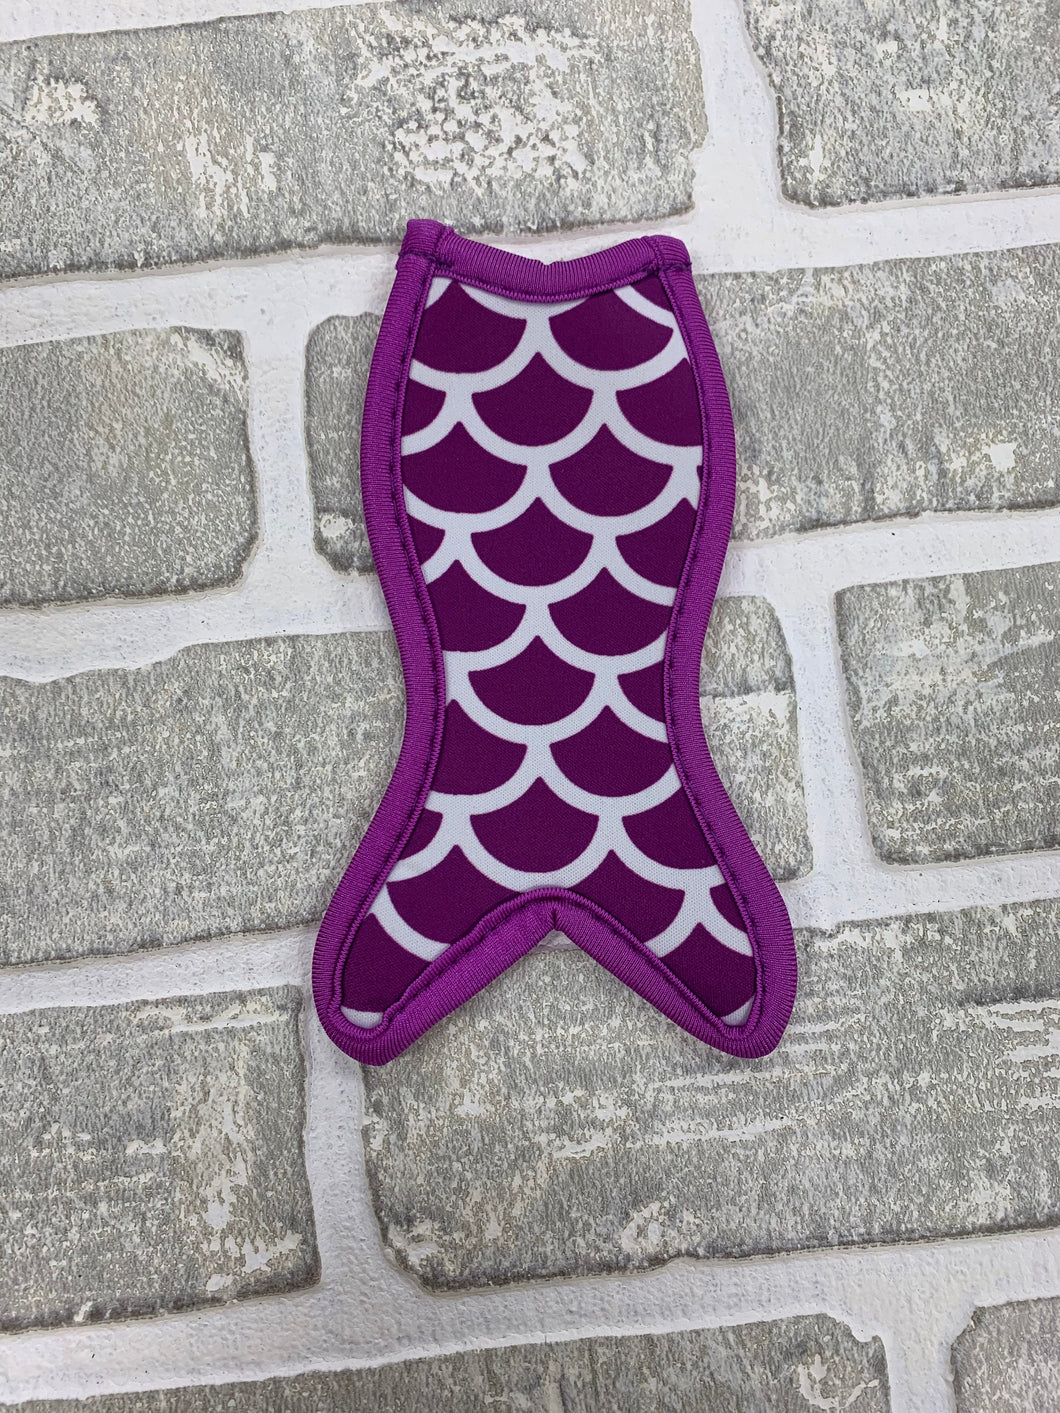 Purple and white mermaid popsicle holder blanks